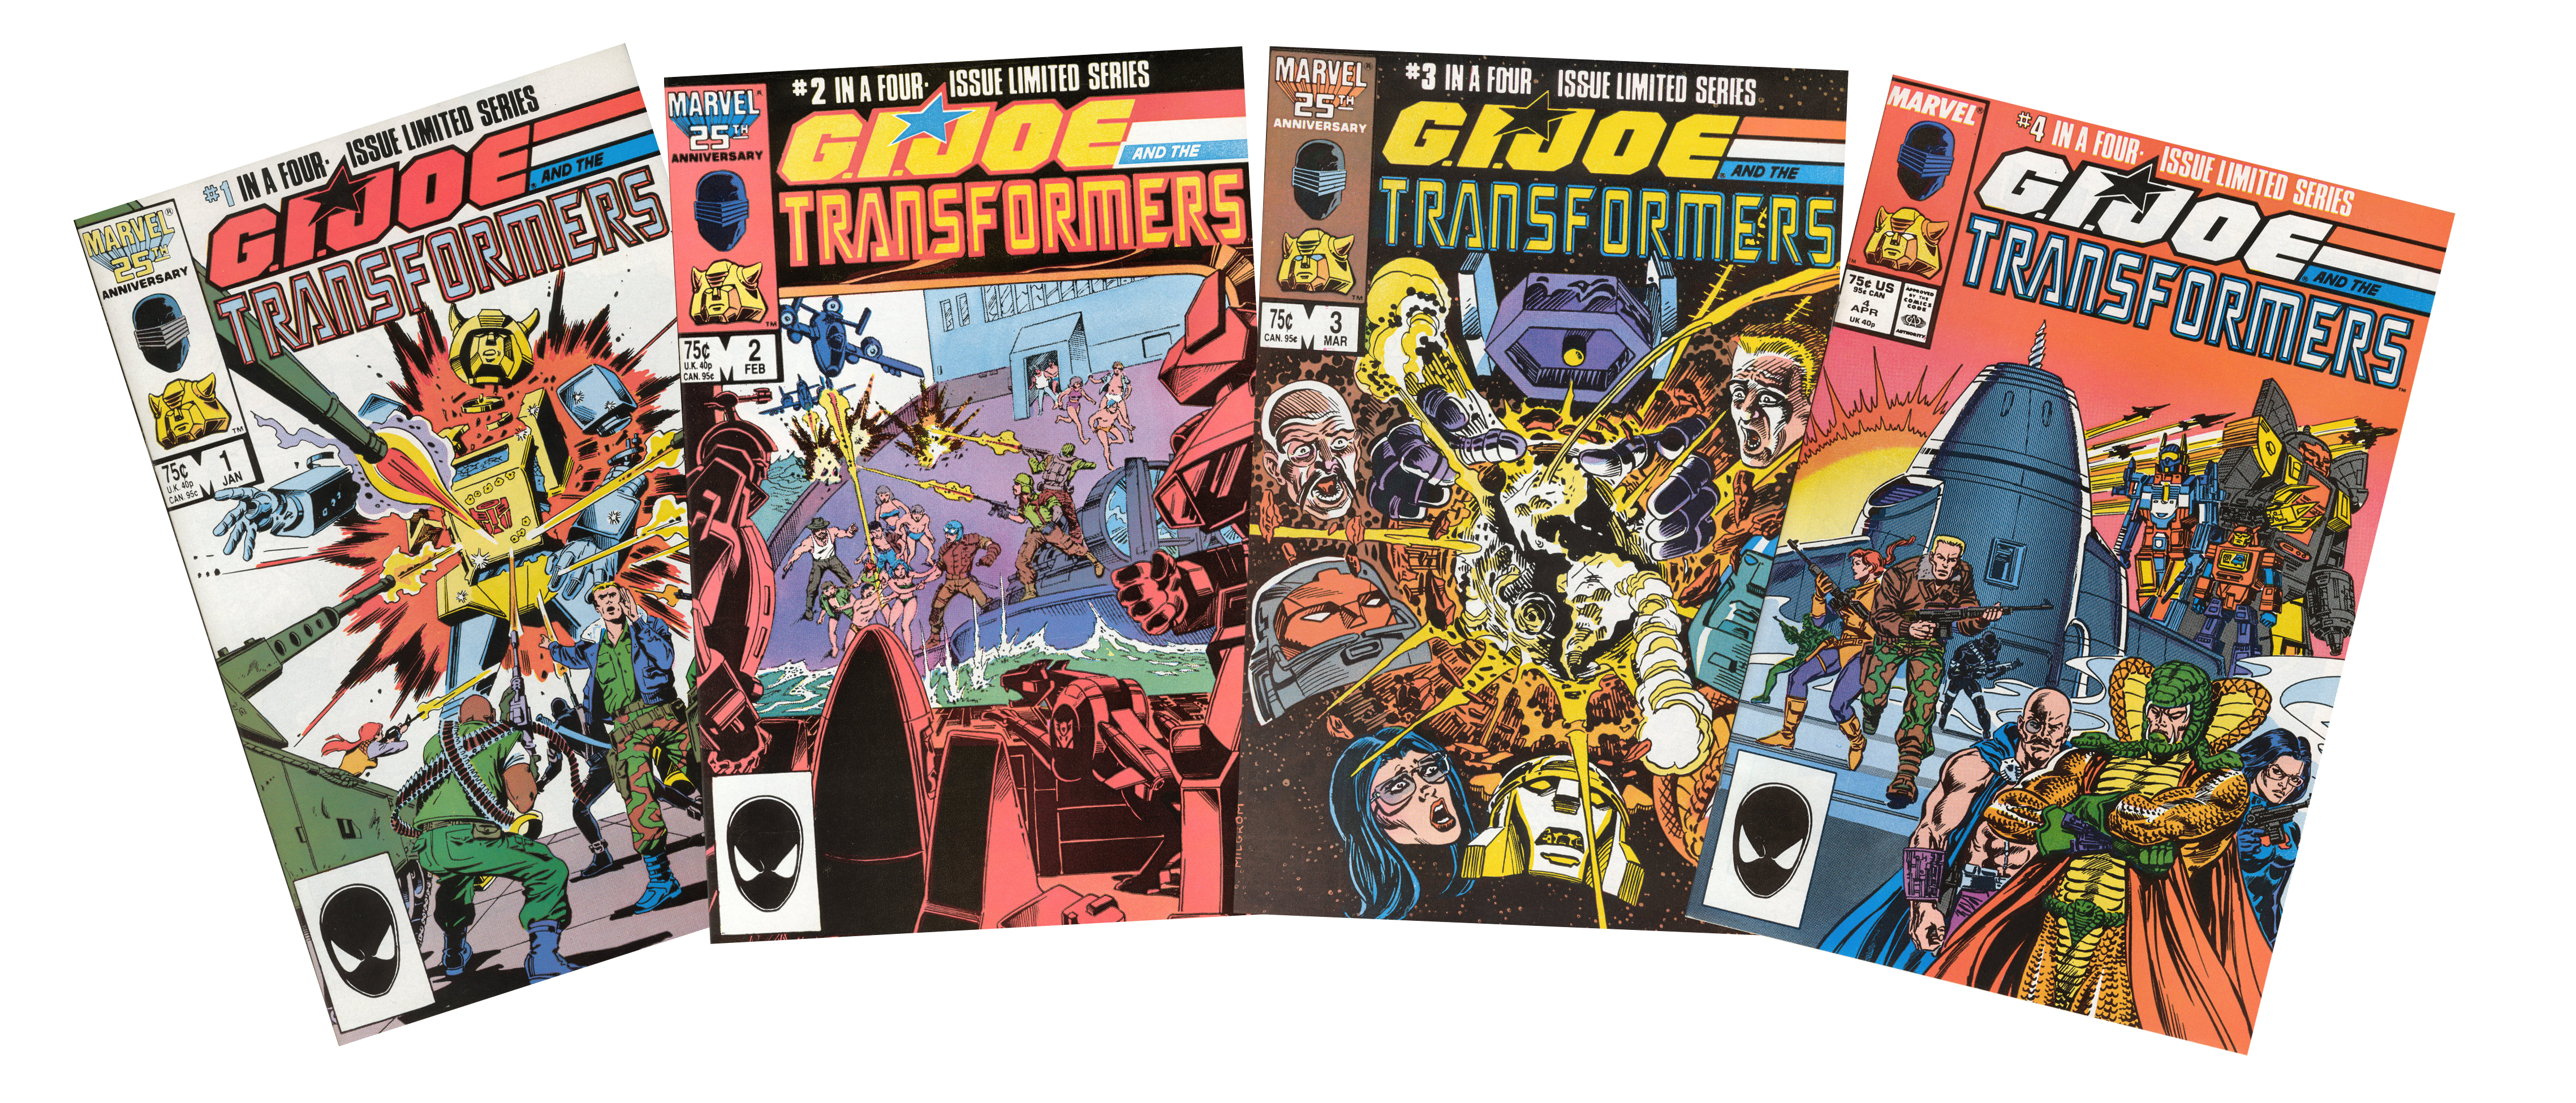 Transformers & G.I. Joe, finally the shared universe I always dreamed of…